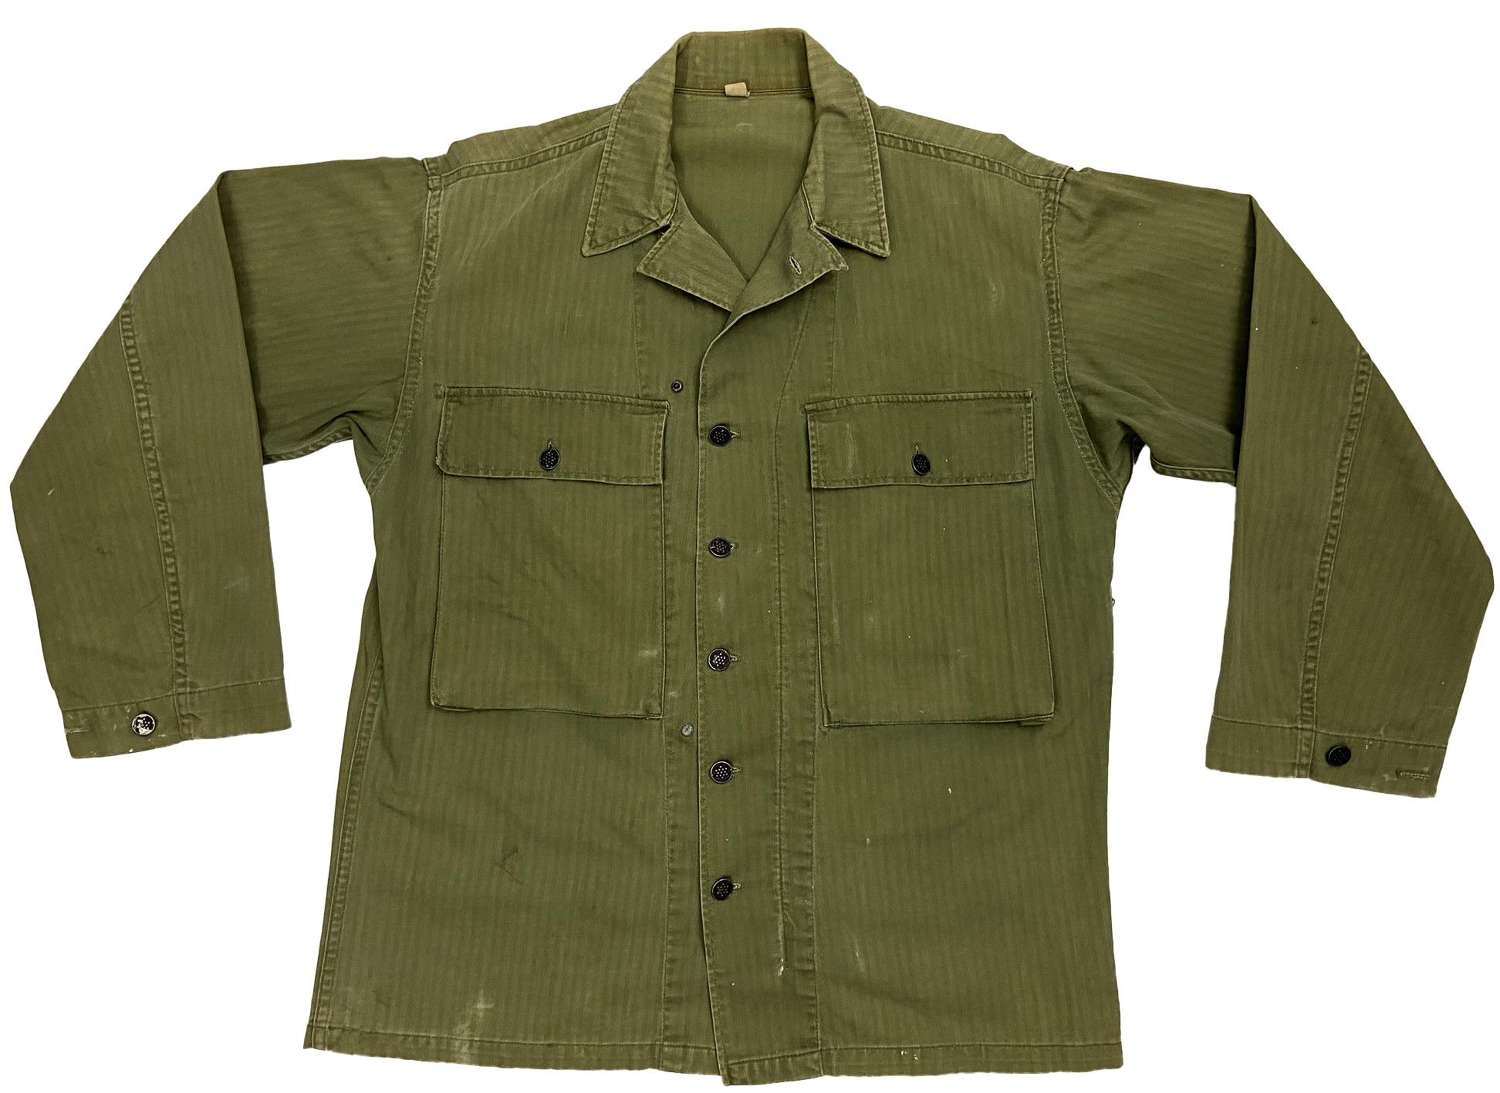 Original WW2 US Army Second Pattern HBT Jacket - Size 38R